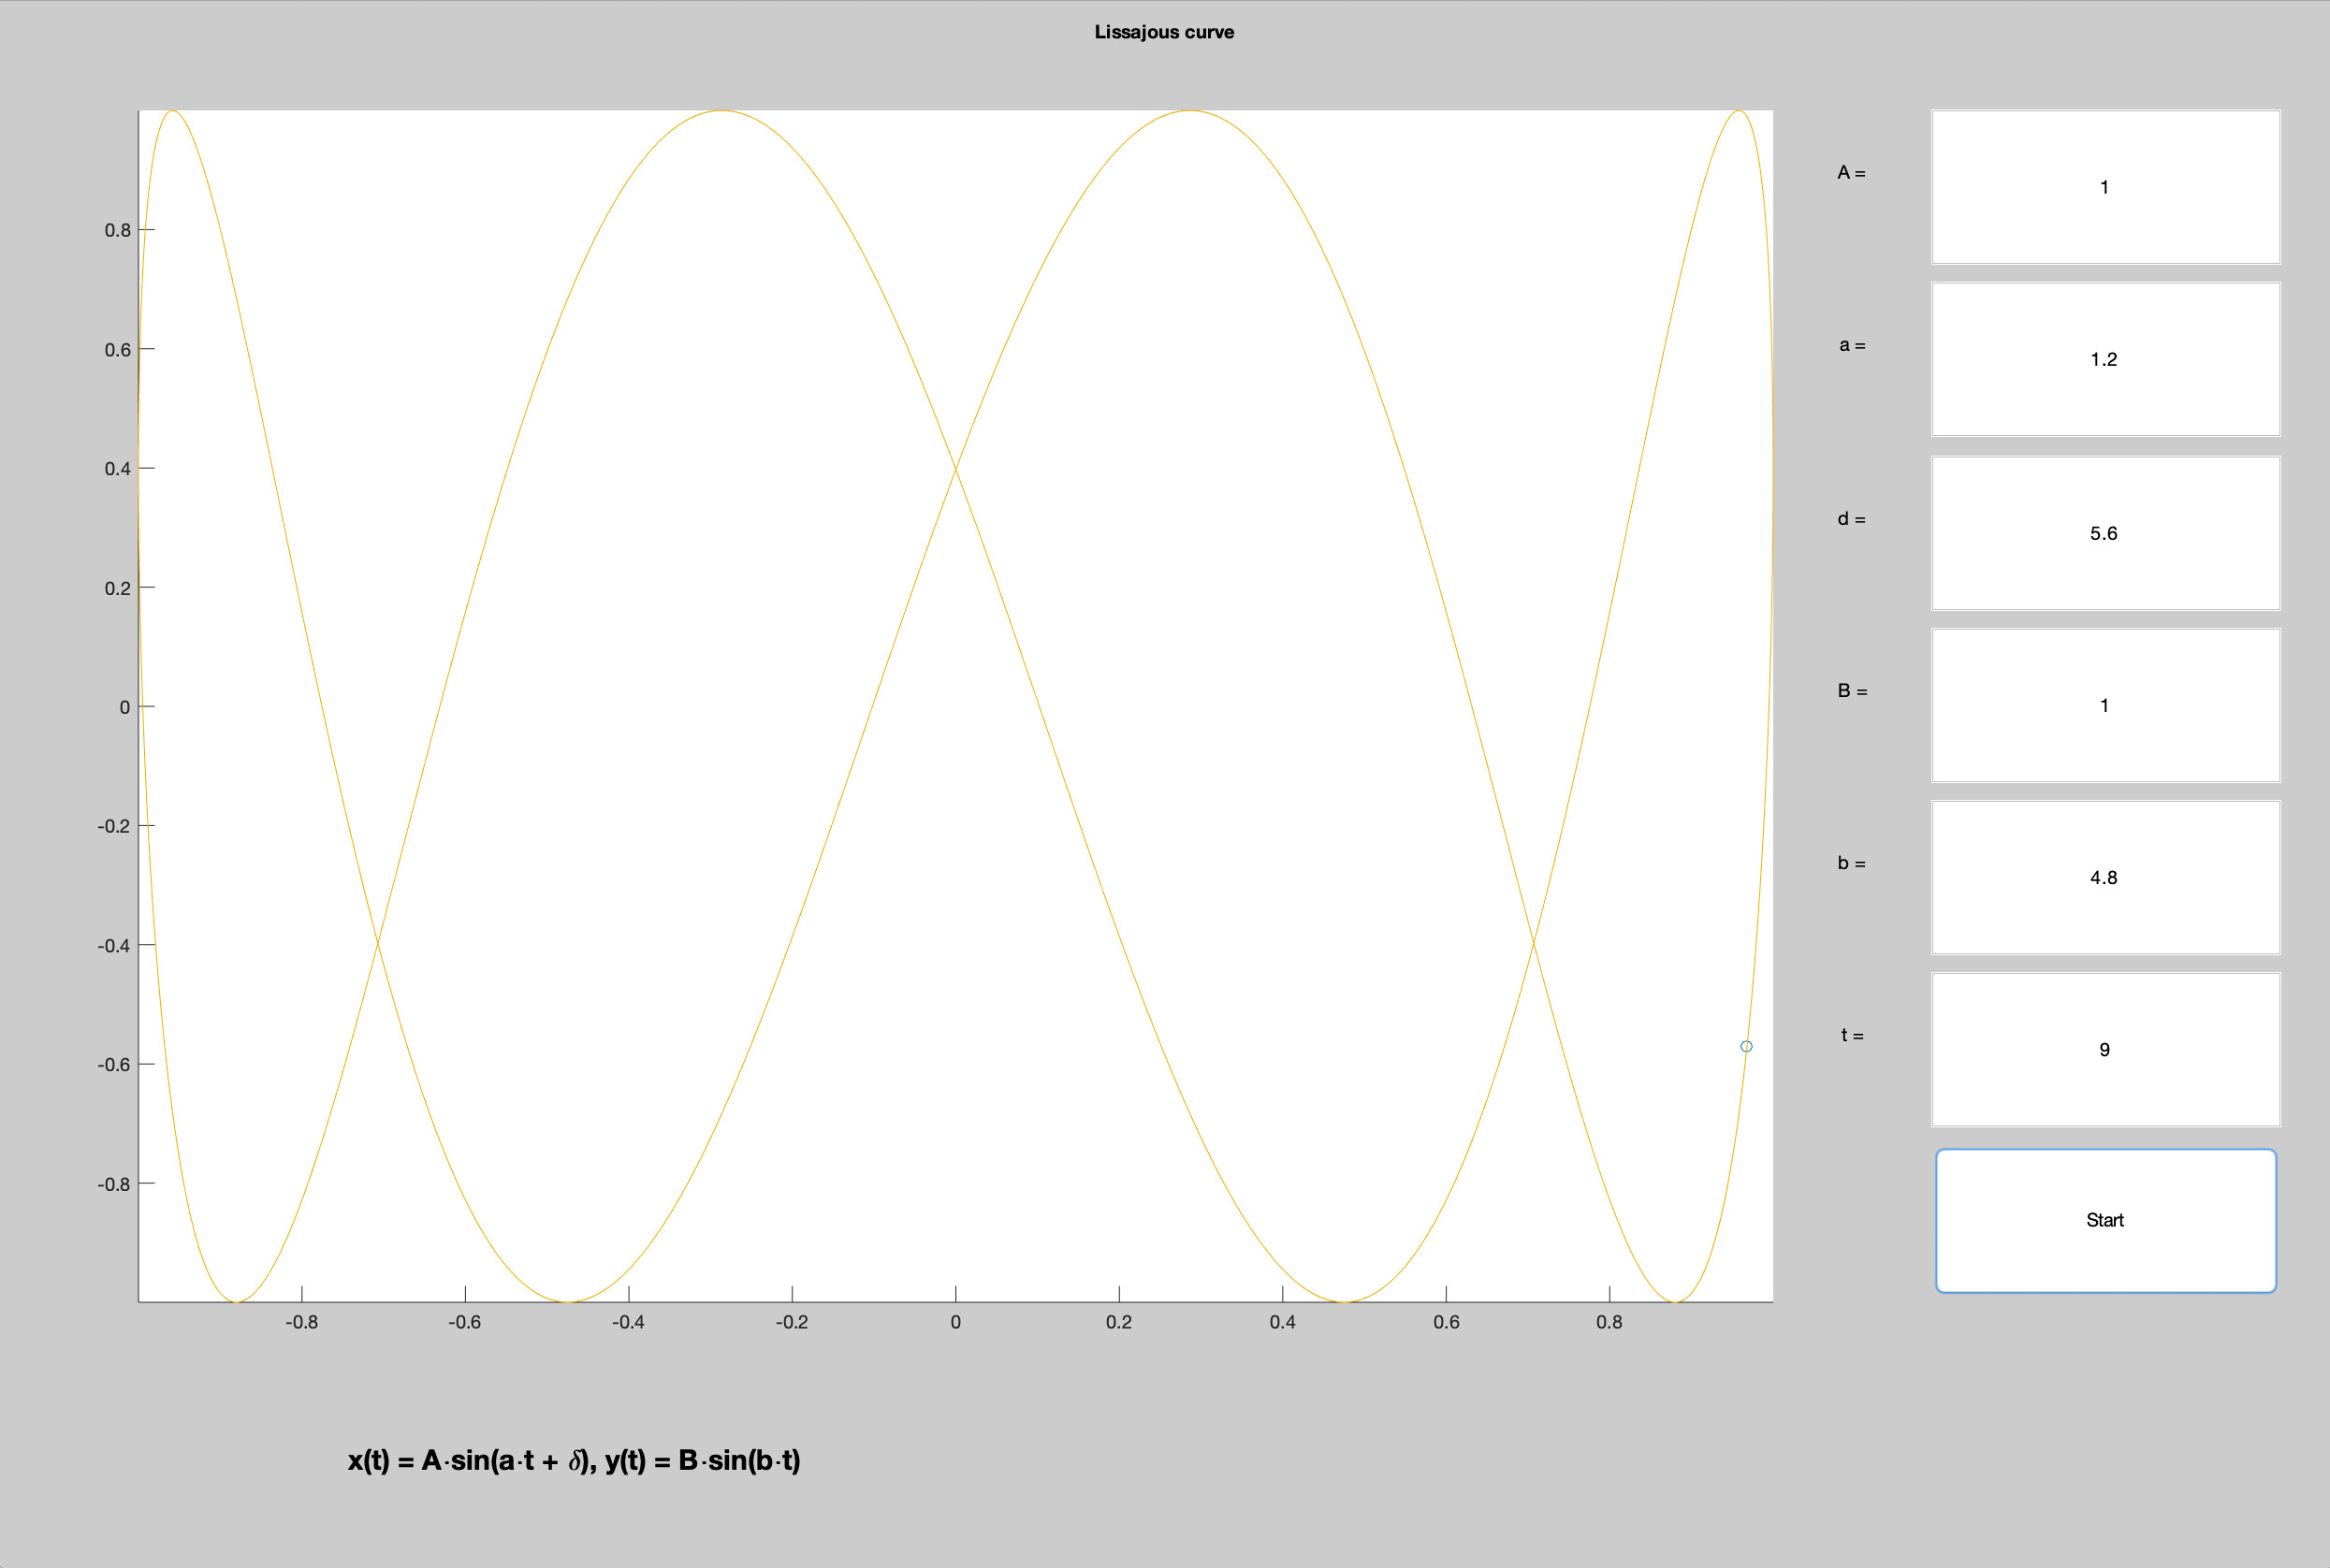 Figure 6 : MATLAB Lissajous curve